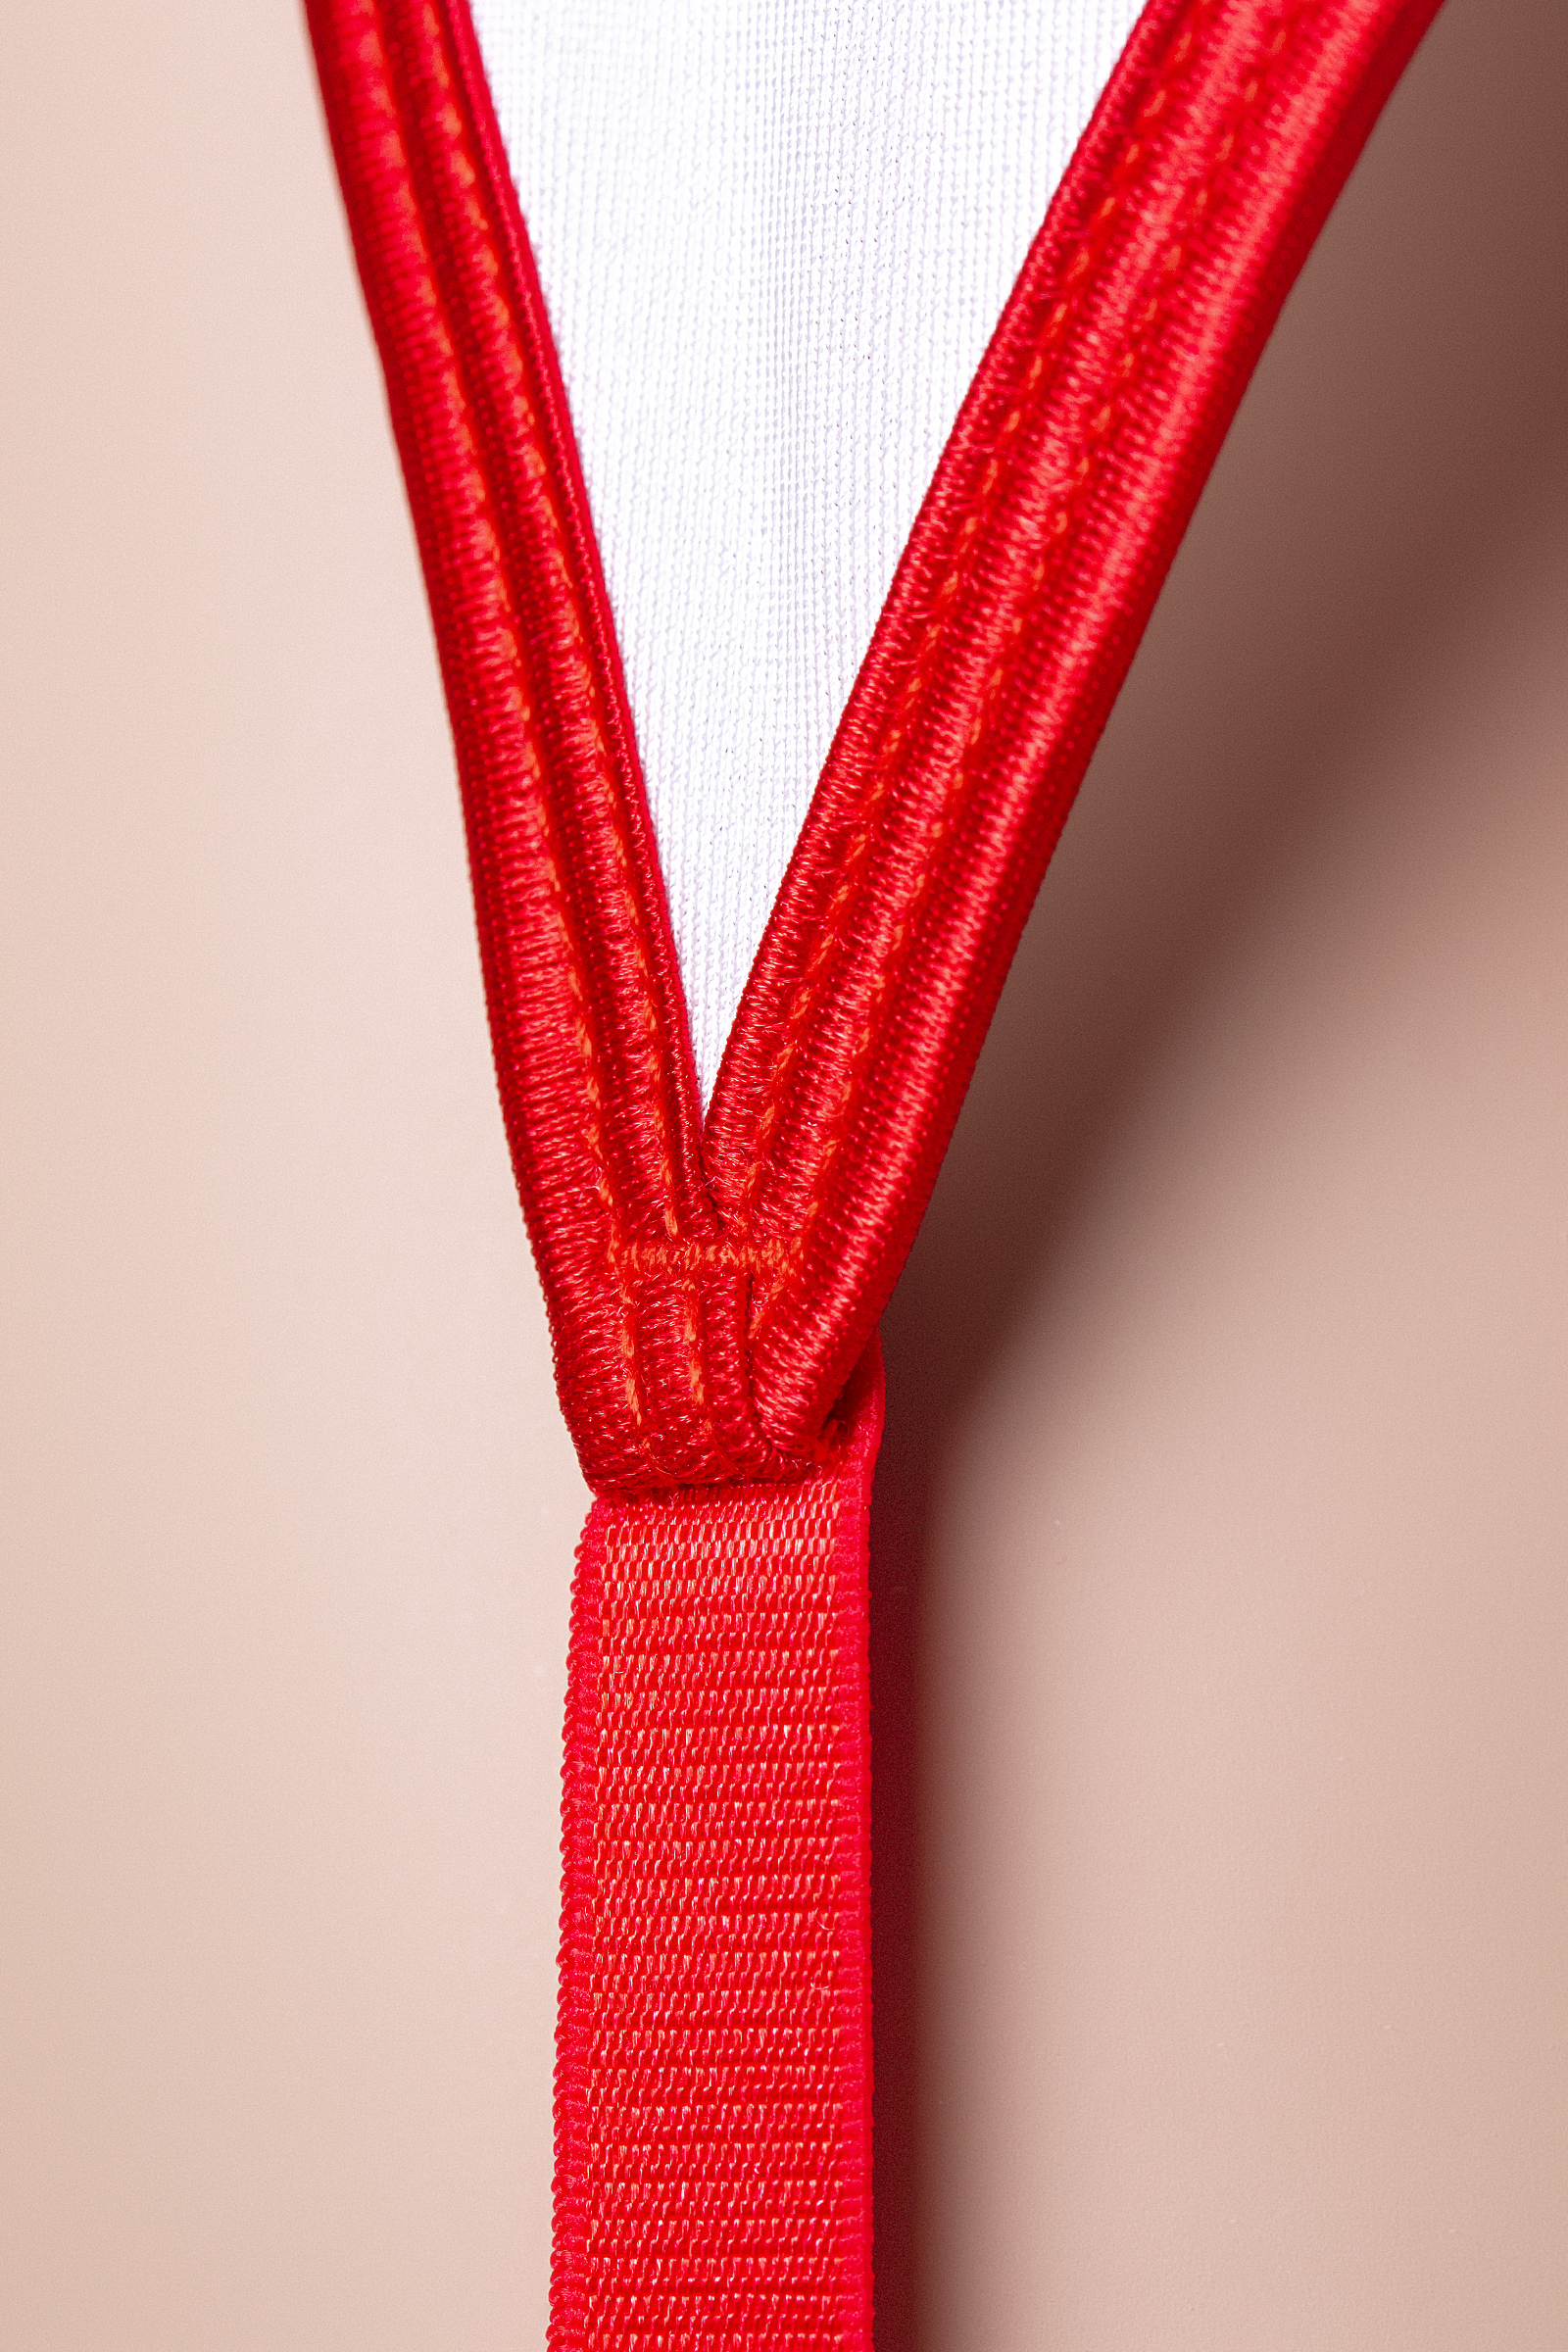 Костюм медсестры Candy Girl Leann (топ, стринги, чулки), бело-красный, OS. Фото N9